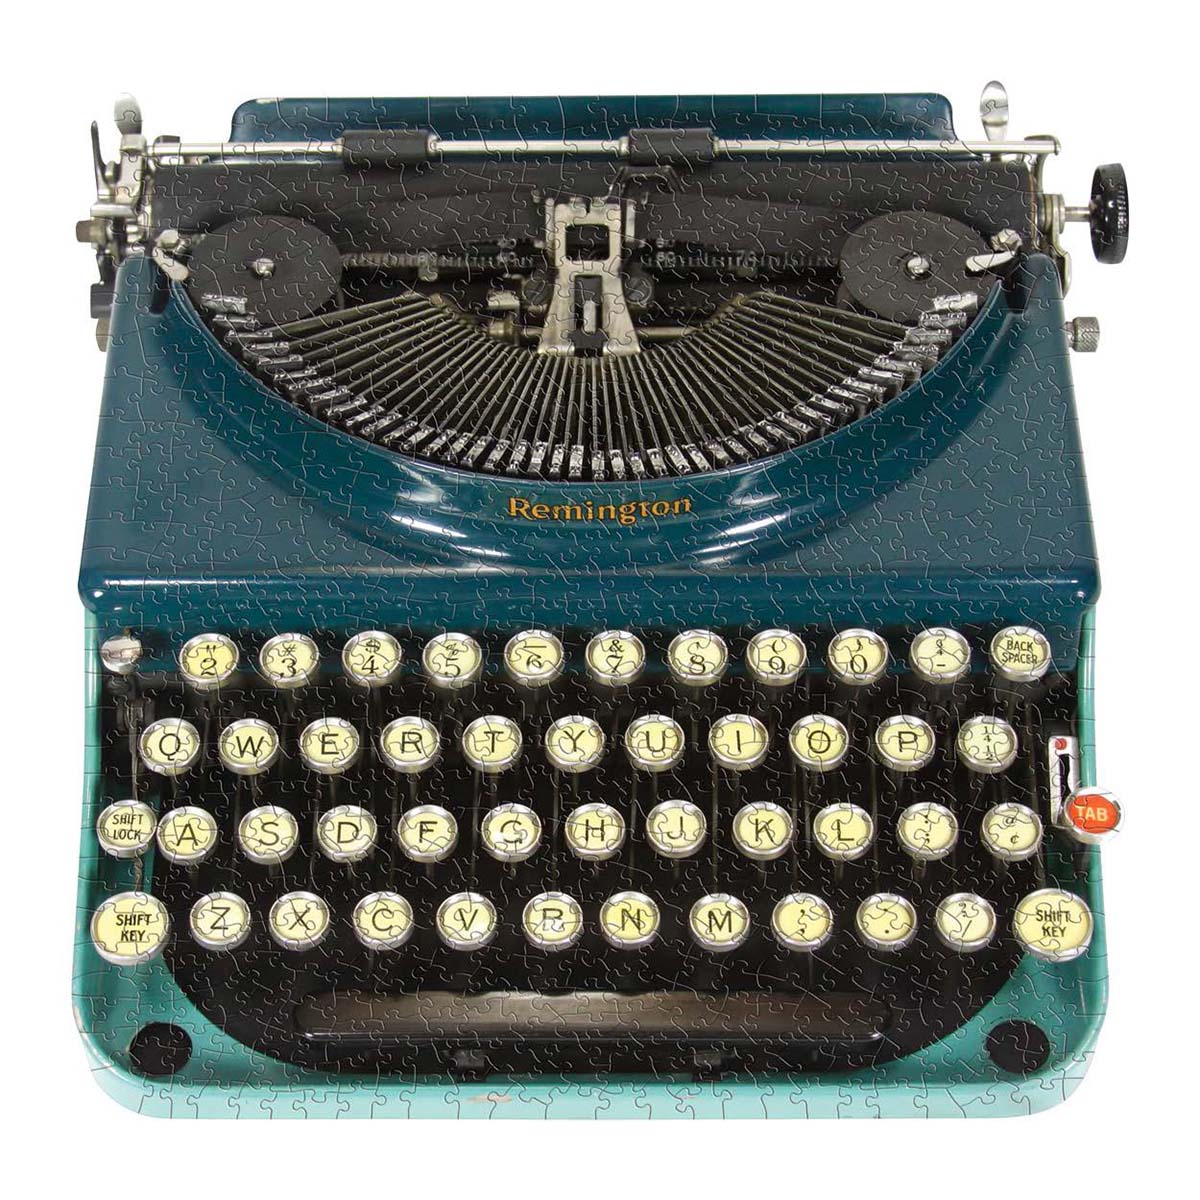 Vintage Typewriter (750 pc shaped puzzle)